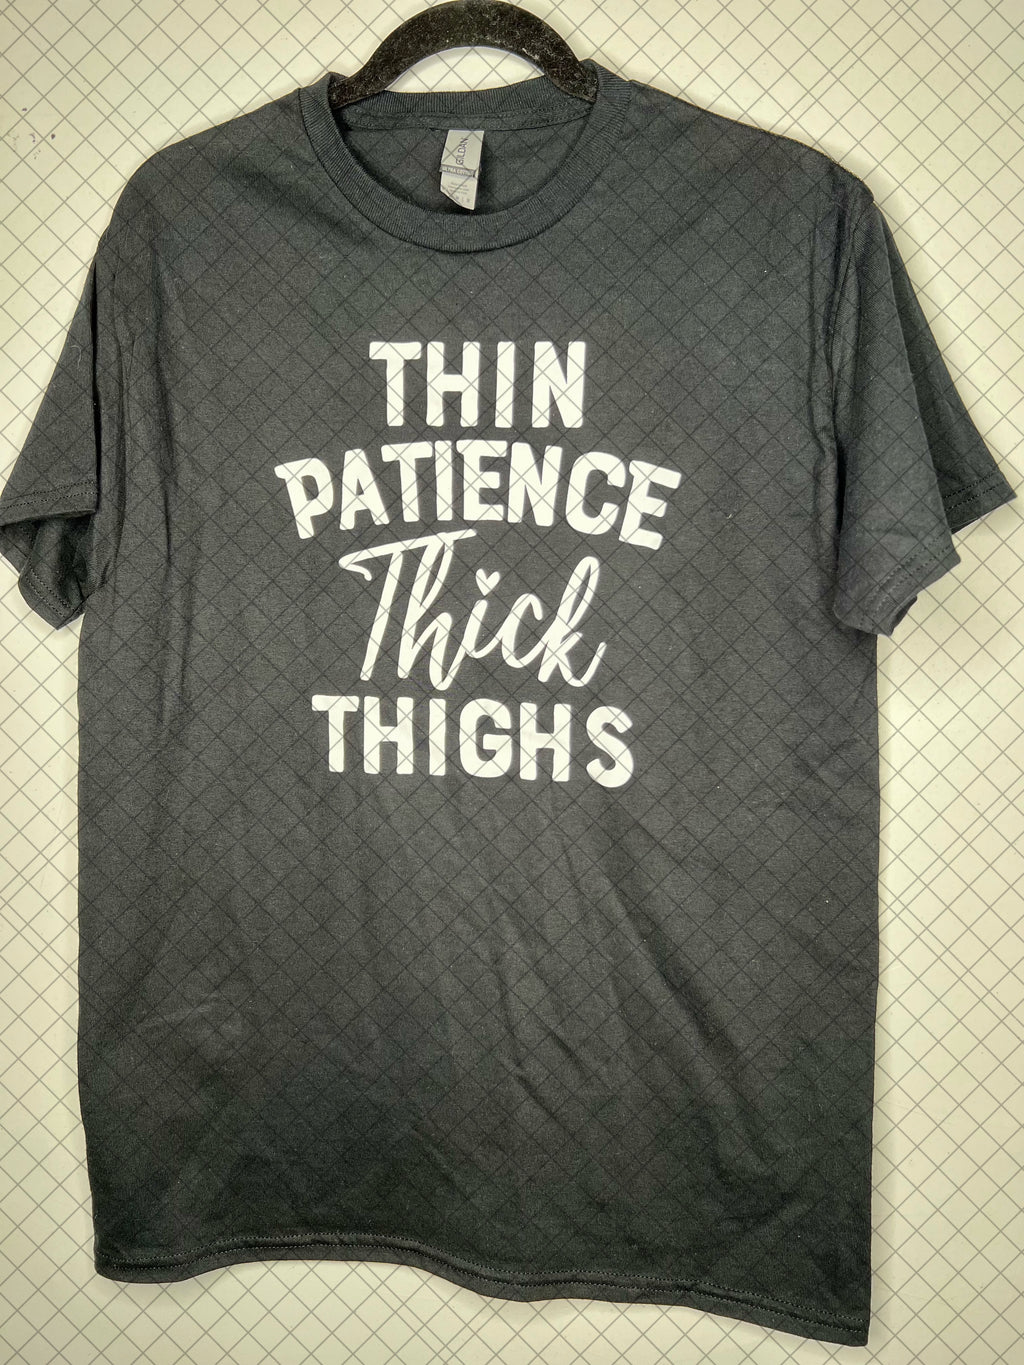 RTS Adult M Black T-Shirt Thin Patience